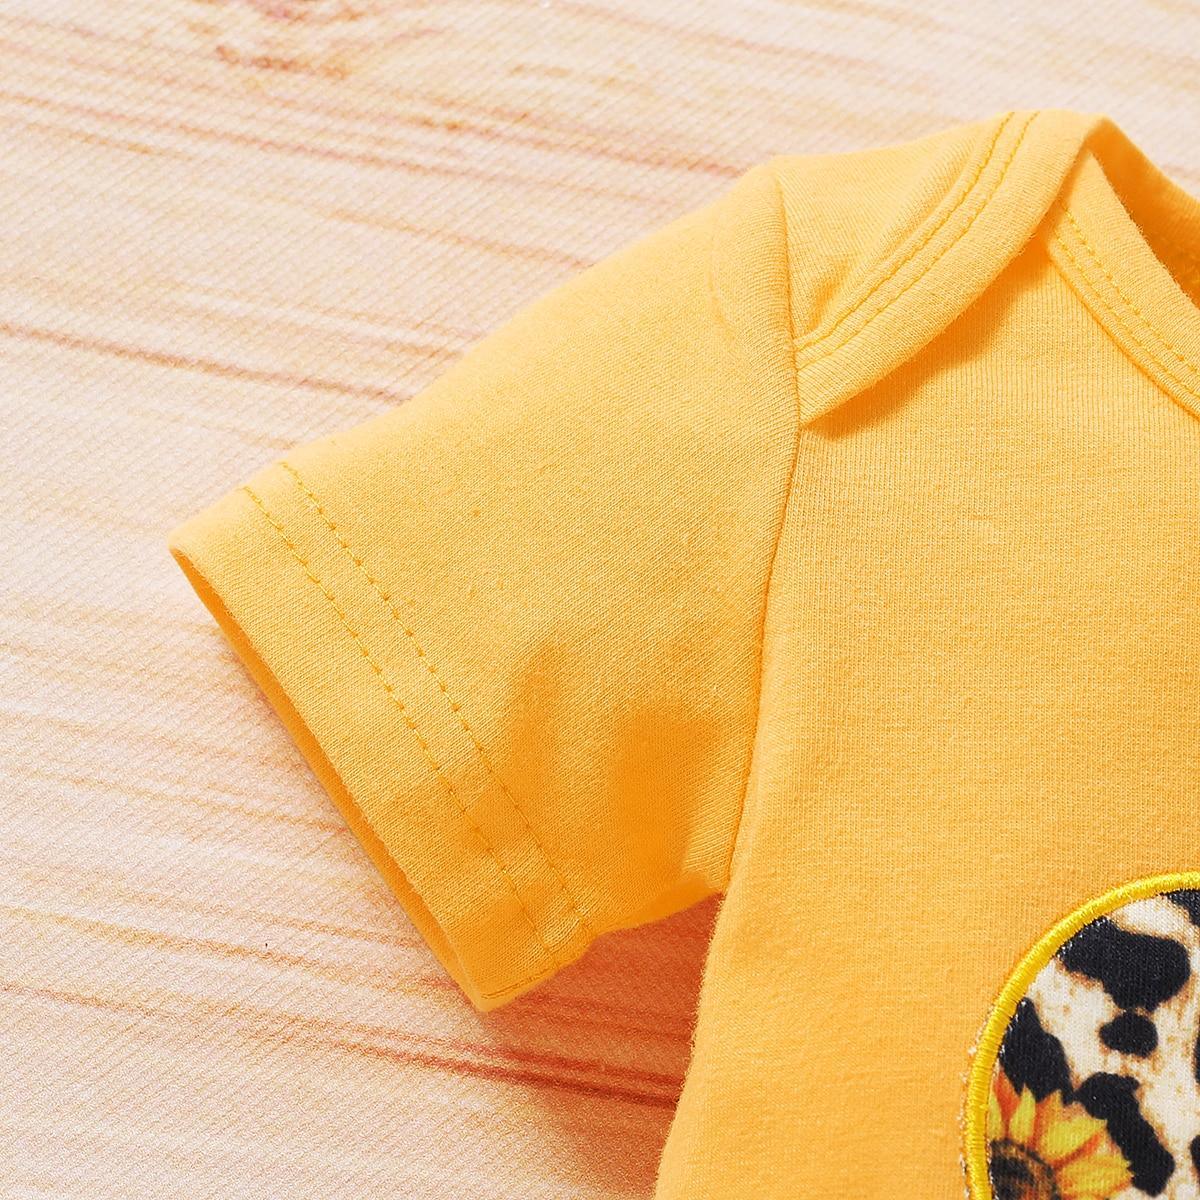 Baby Girl's Leopard / Sunflower Printed Yellow T-Shirt and Tutu Pants with Headband Set - Stylus Kids